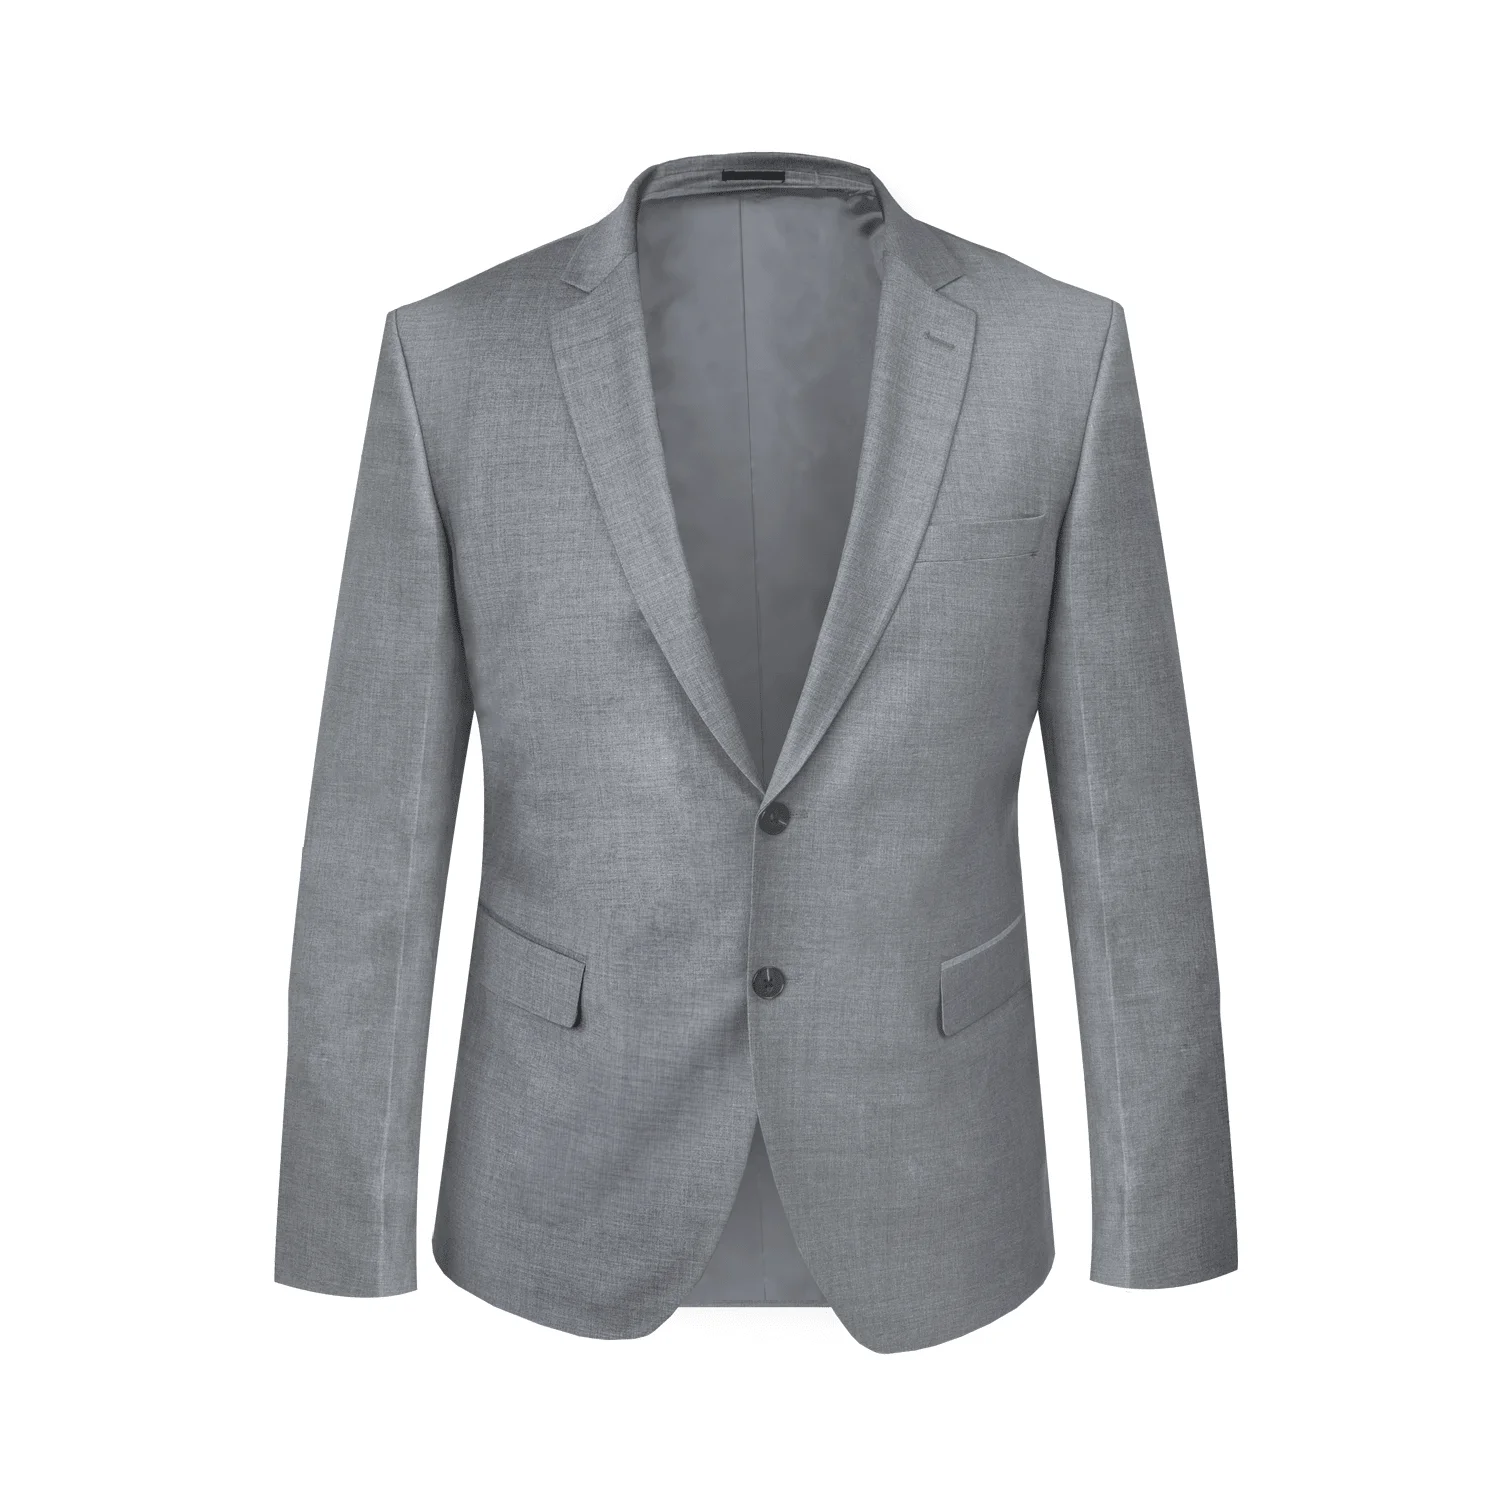 Light Grey Suit - Snover